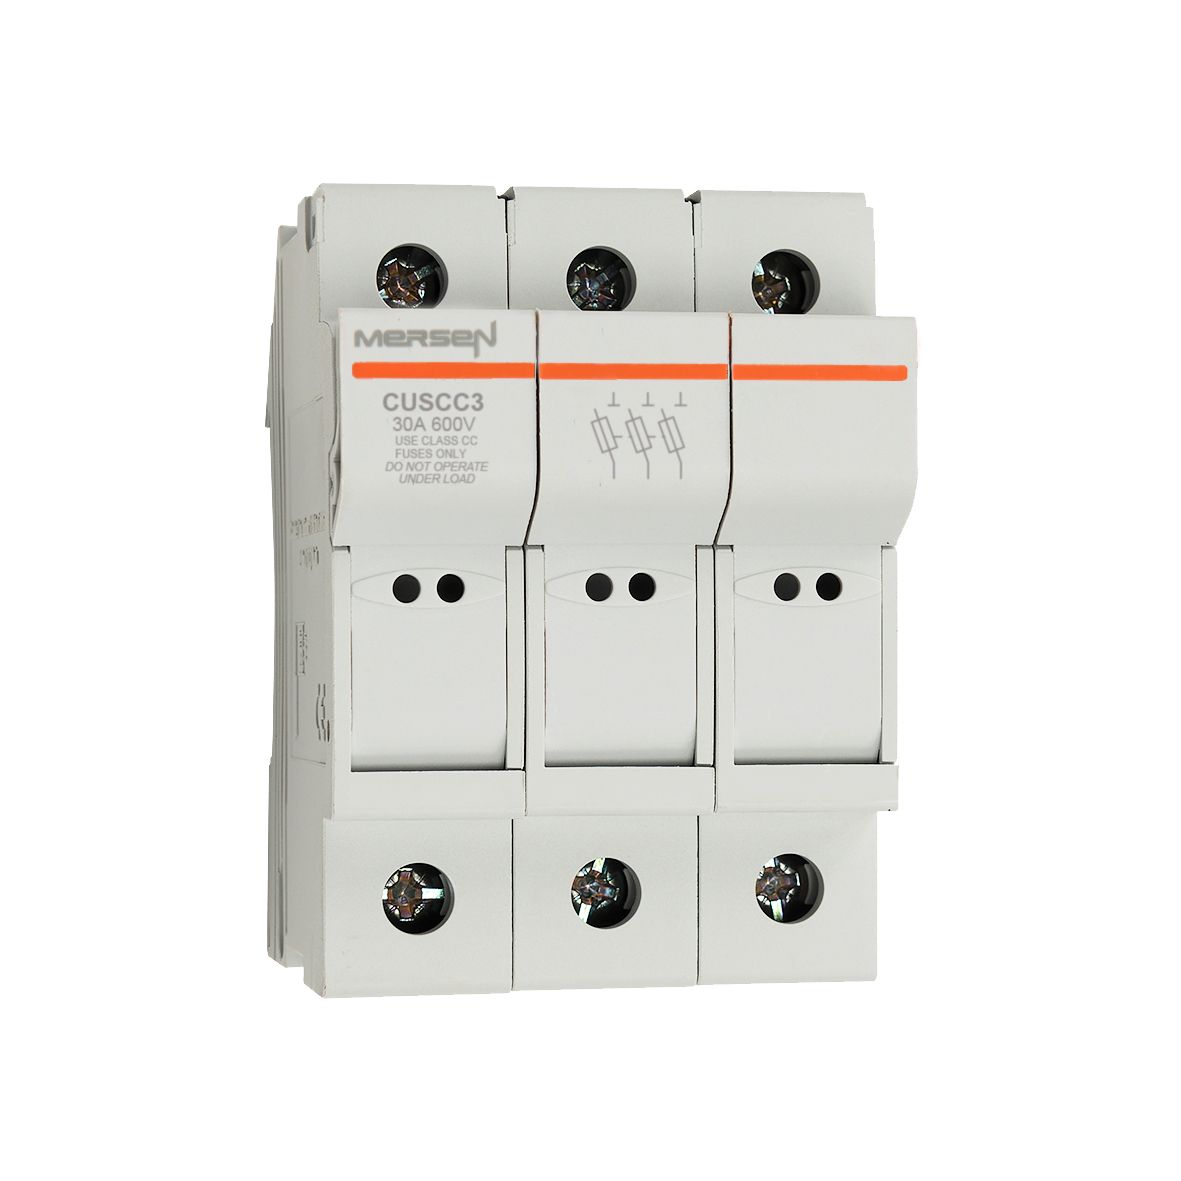 G1062790 - modular fuse holder, UL, 3 poles, 3P, Class CC, DIN rail mounting, IP20